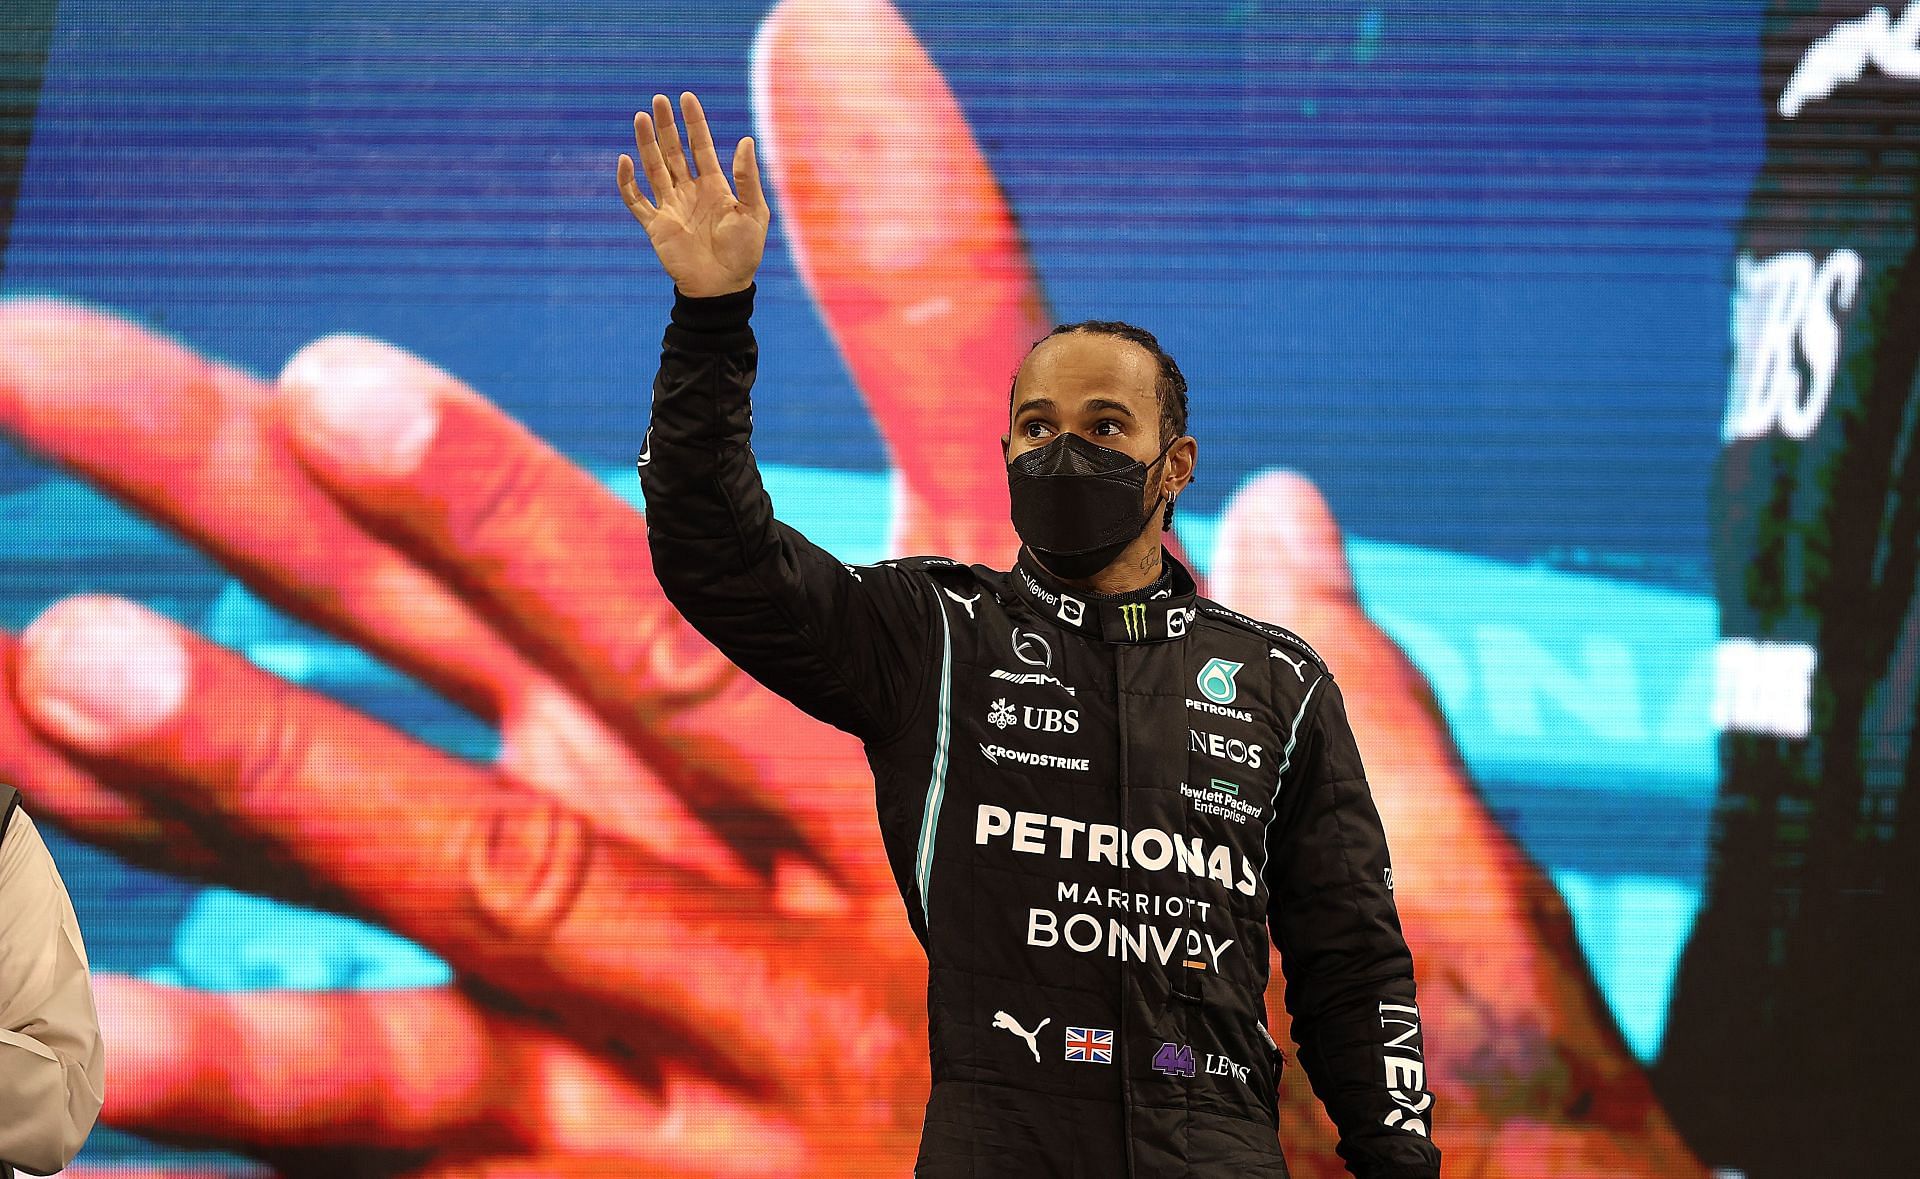 F1 Grand Prix of Abu Dhabi - Lewis Hamilton waves to his fans